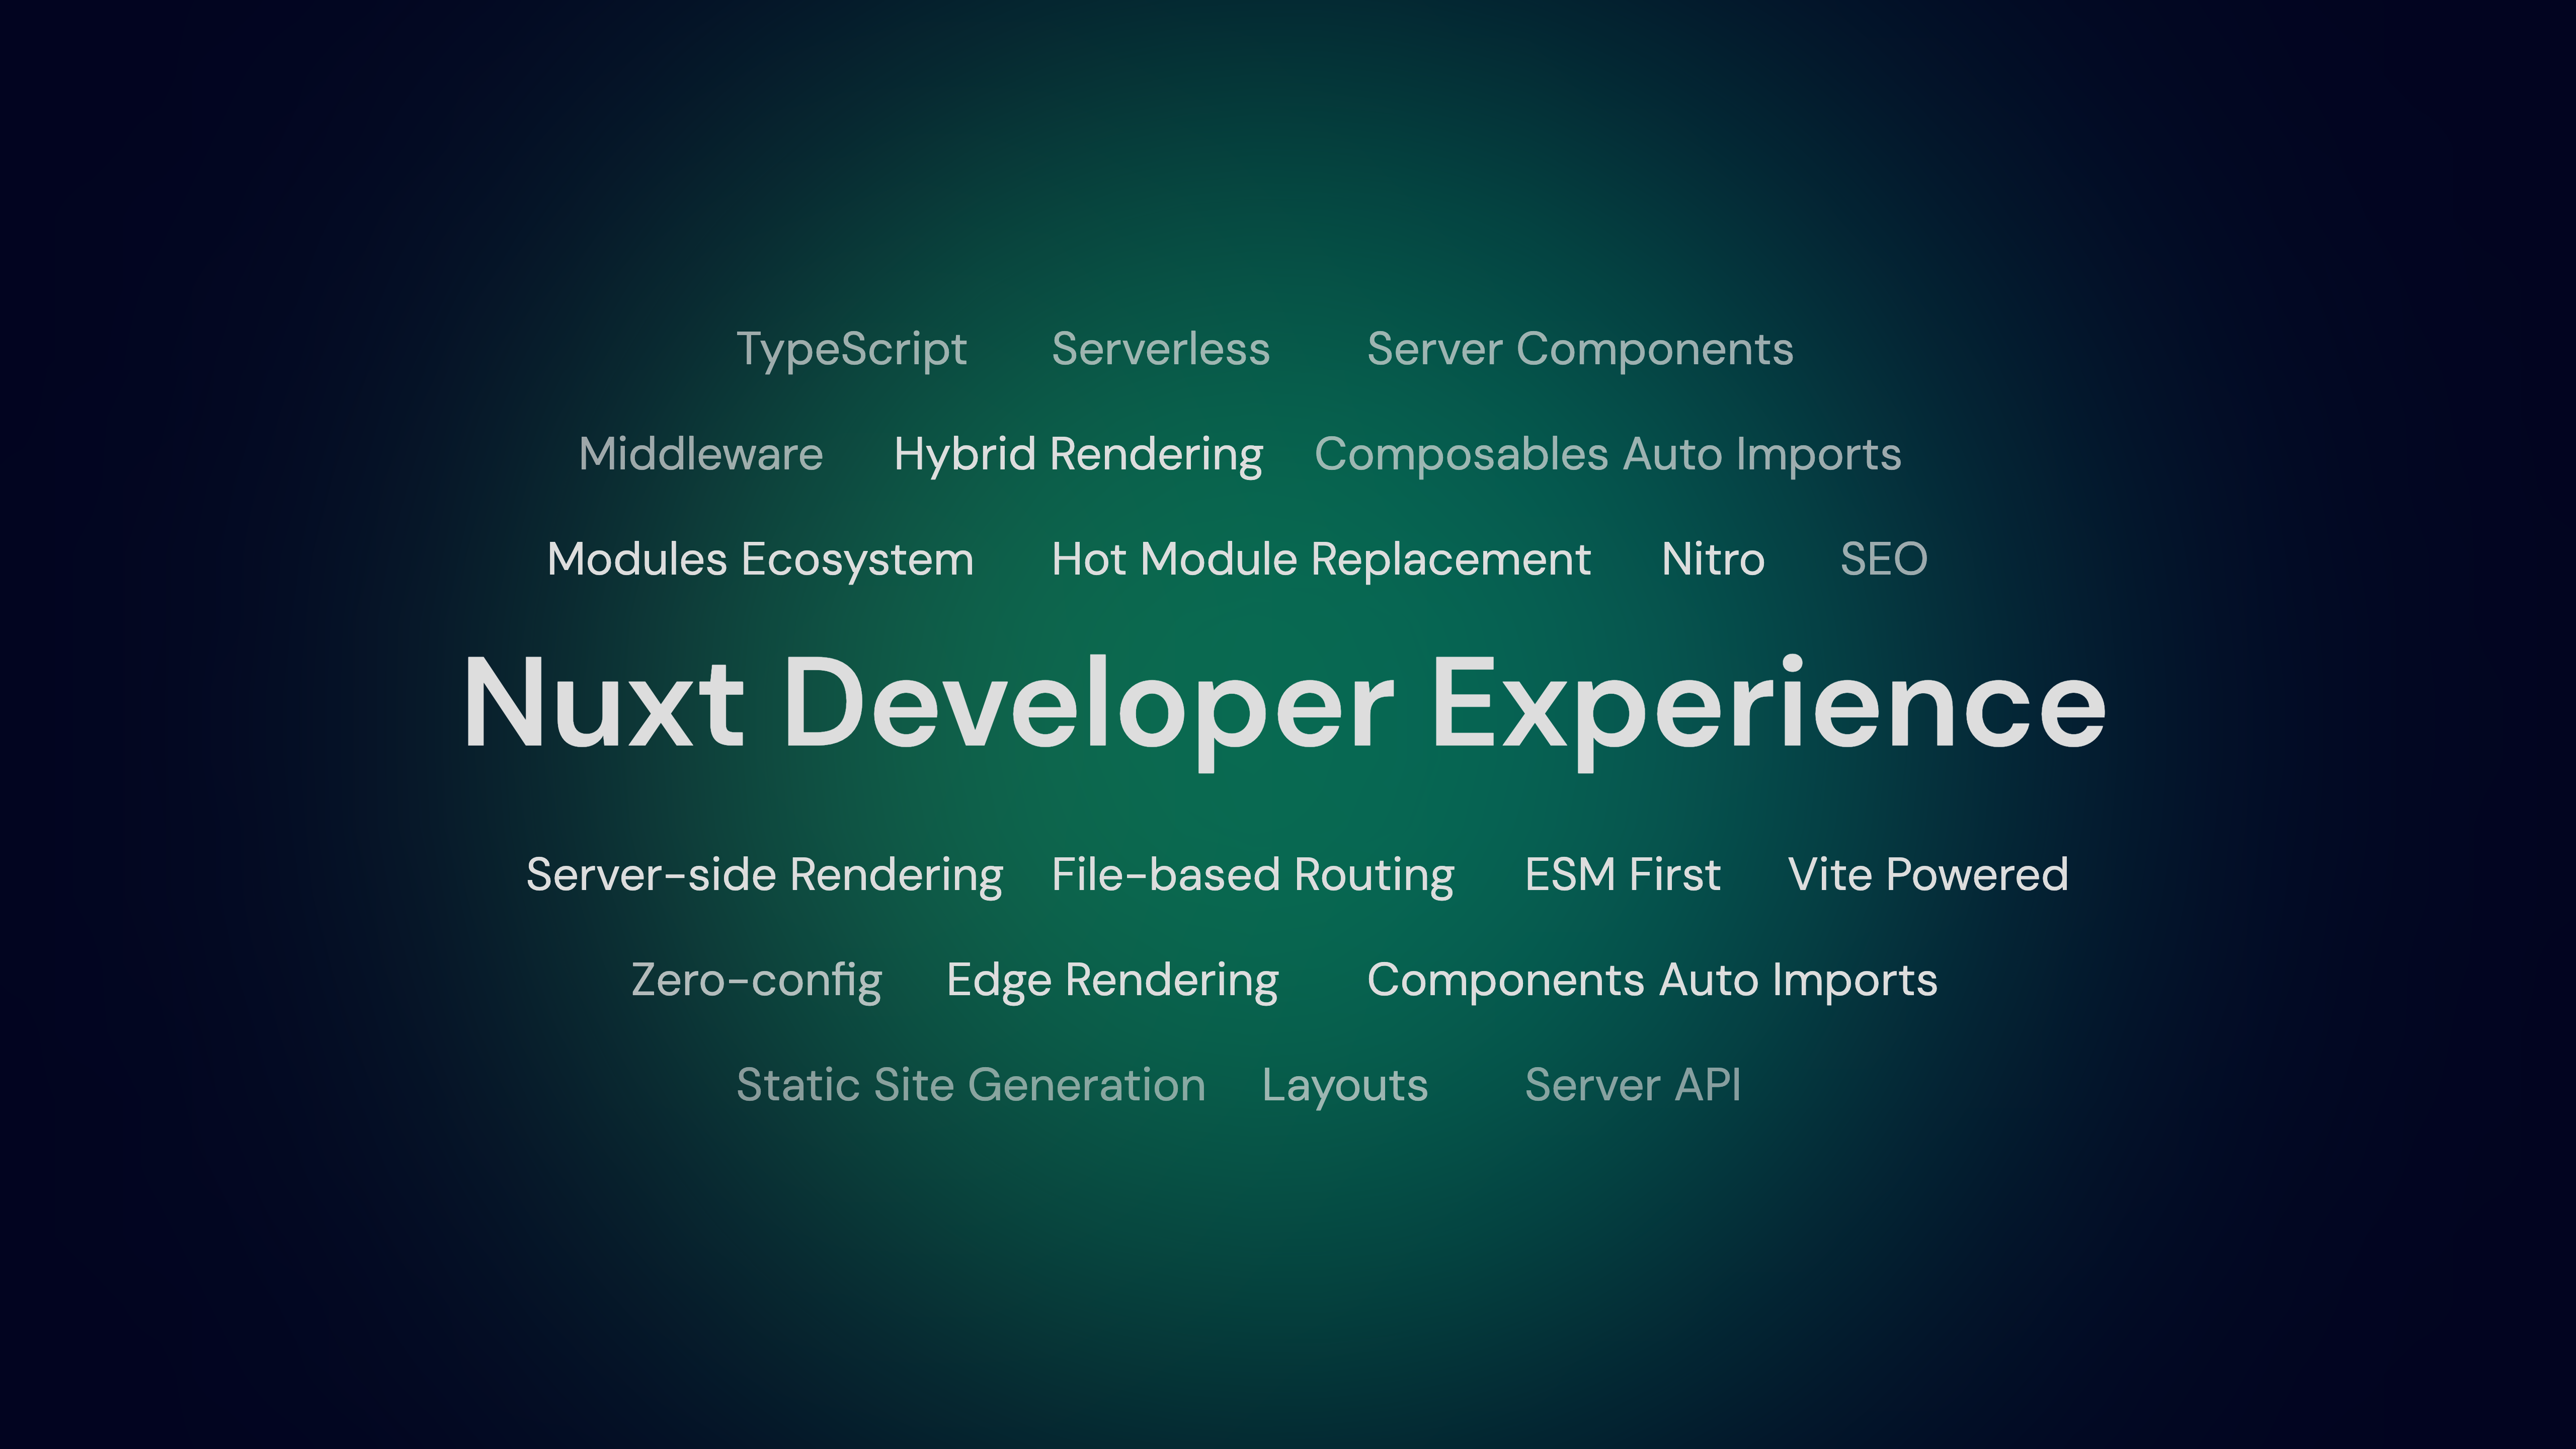 List of Nuxt features that enhance developer experience